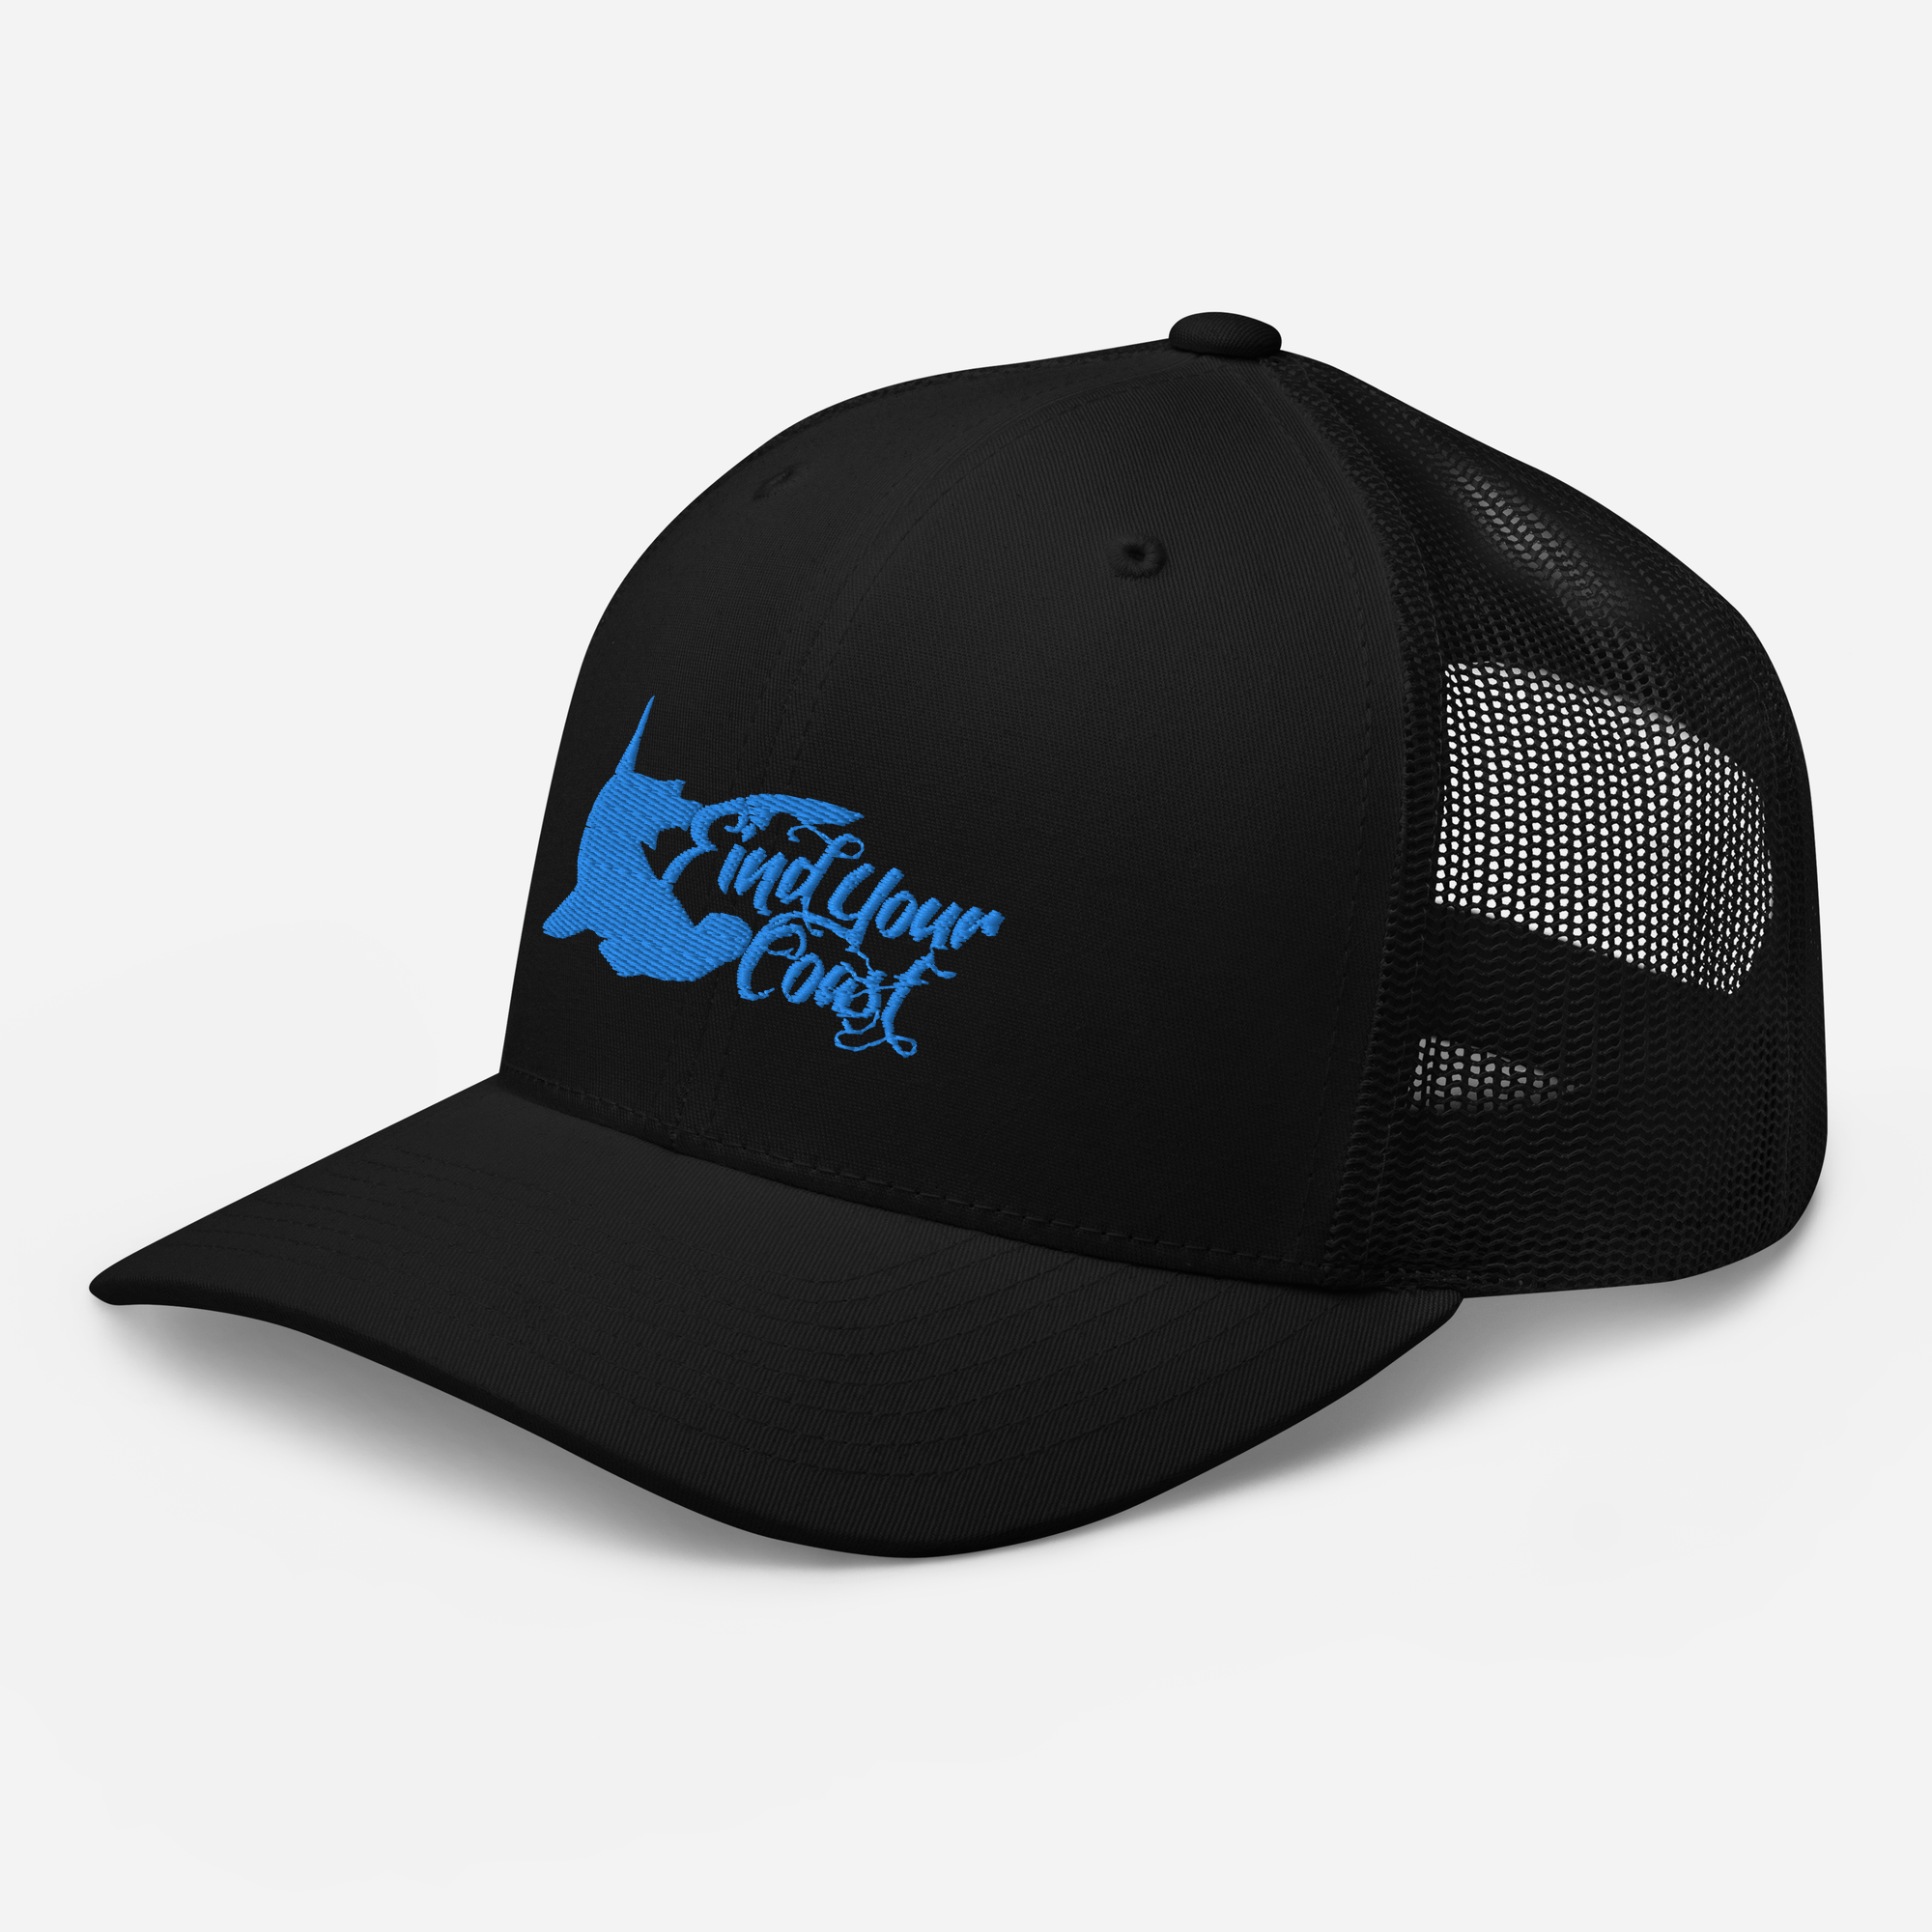 Find Your Coast® Hammerhead Trucker Hats